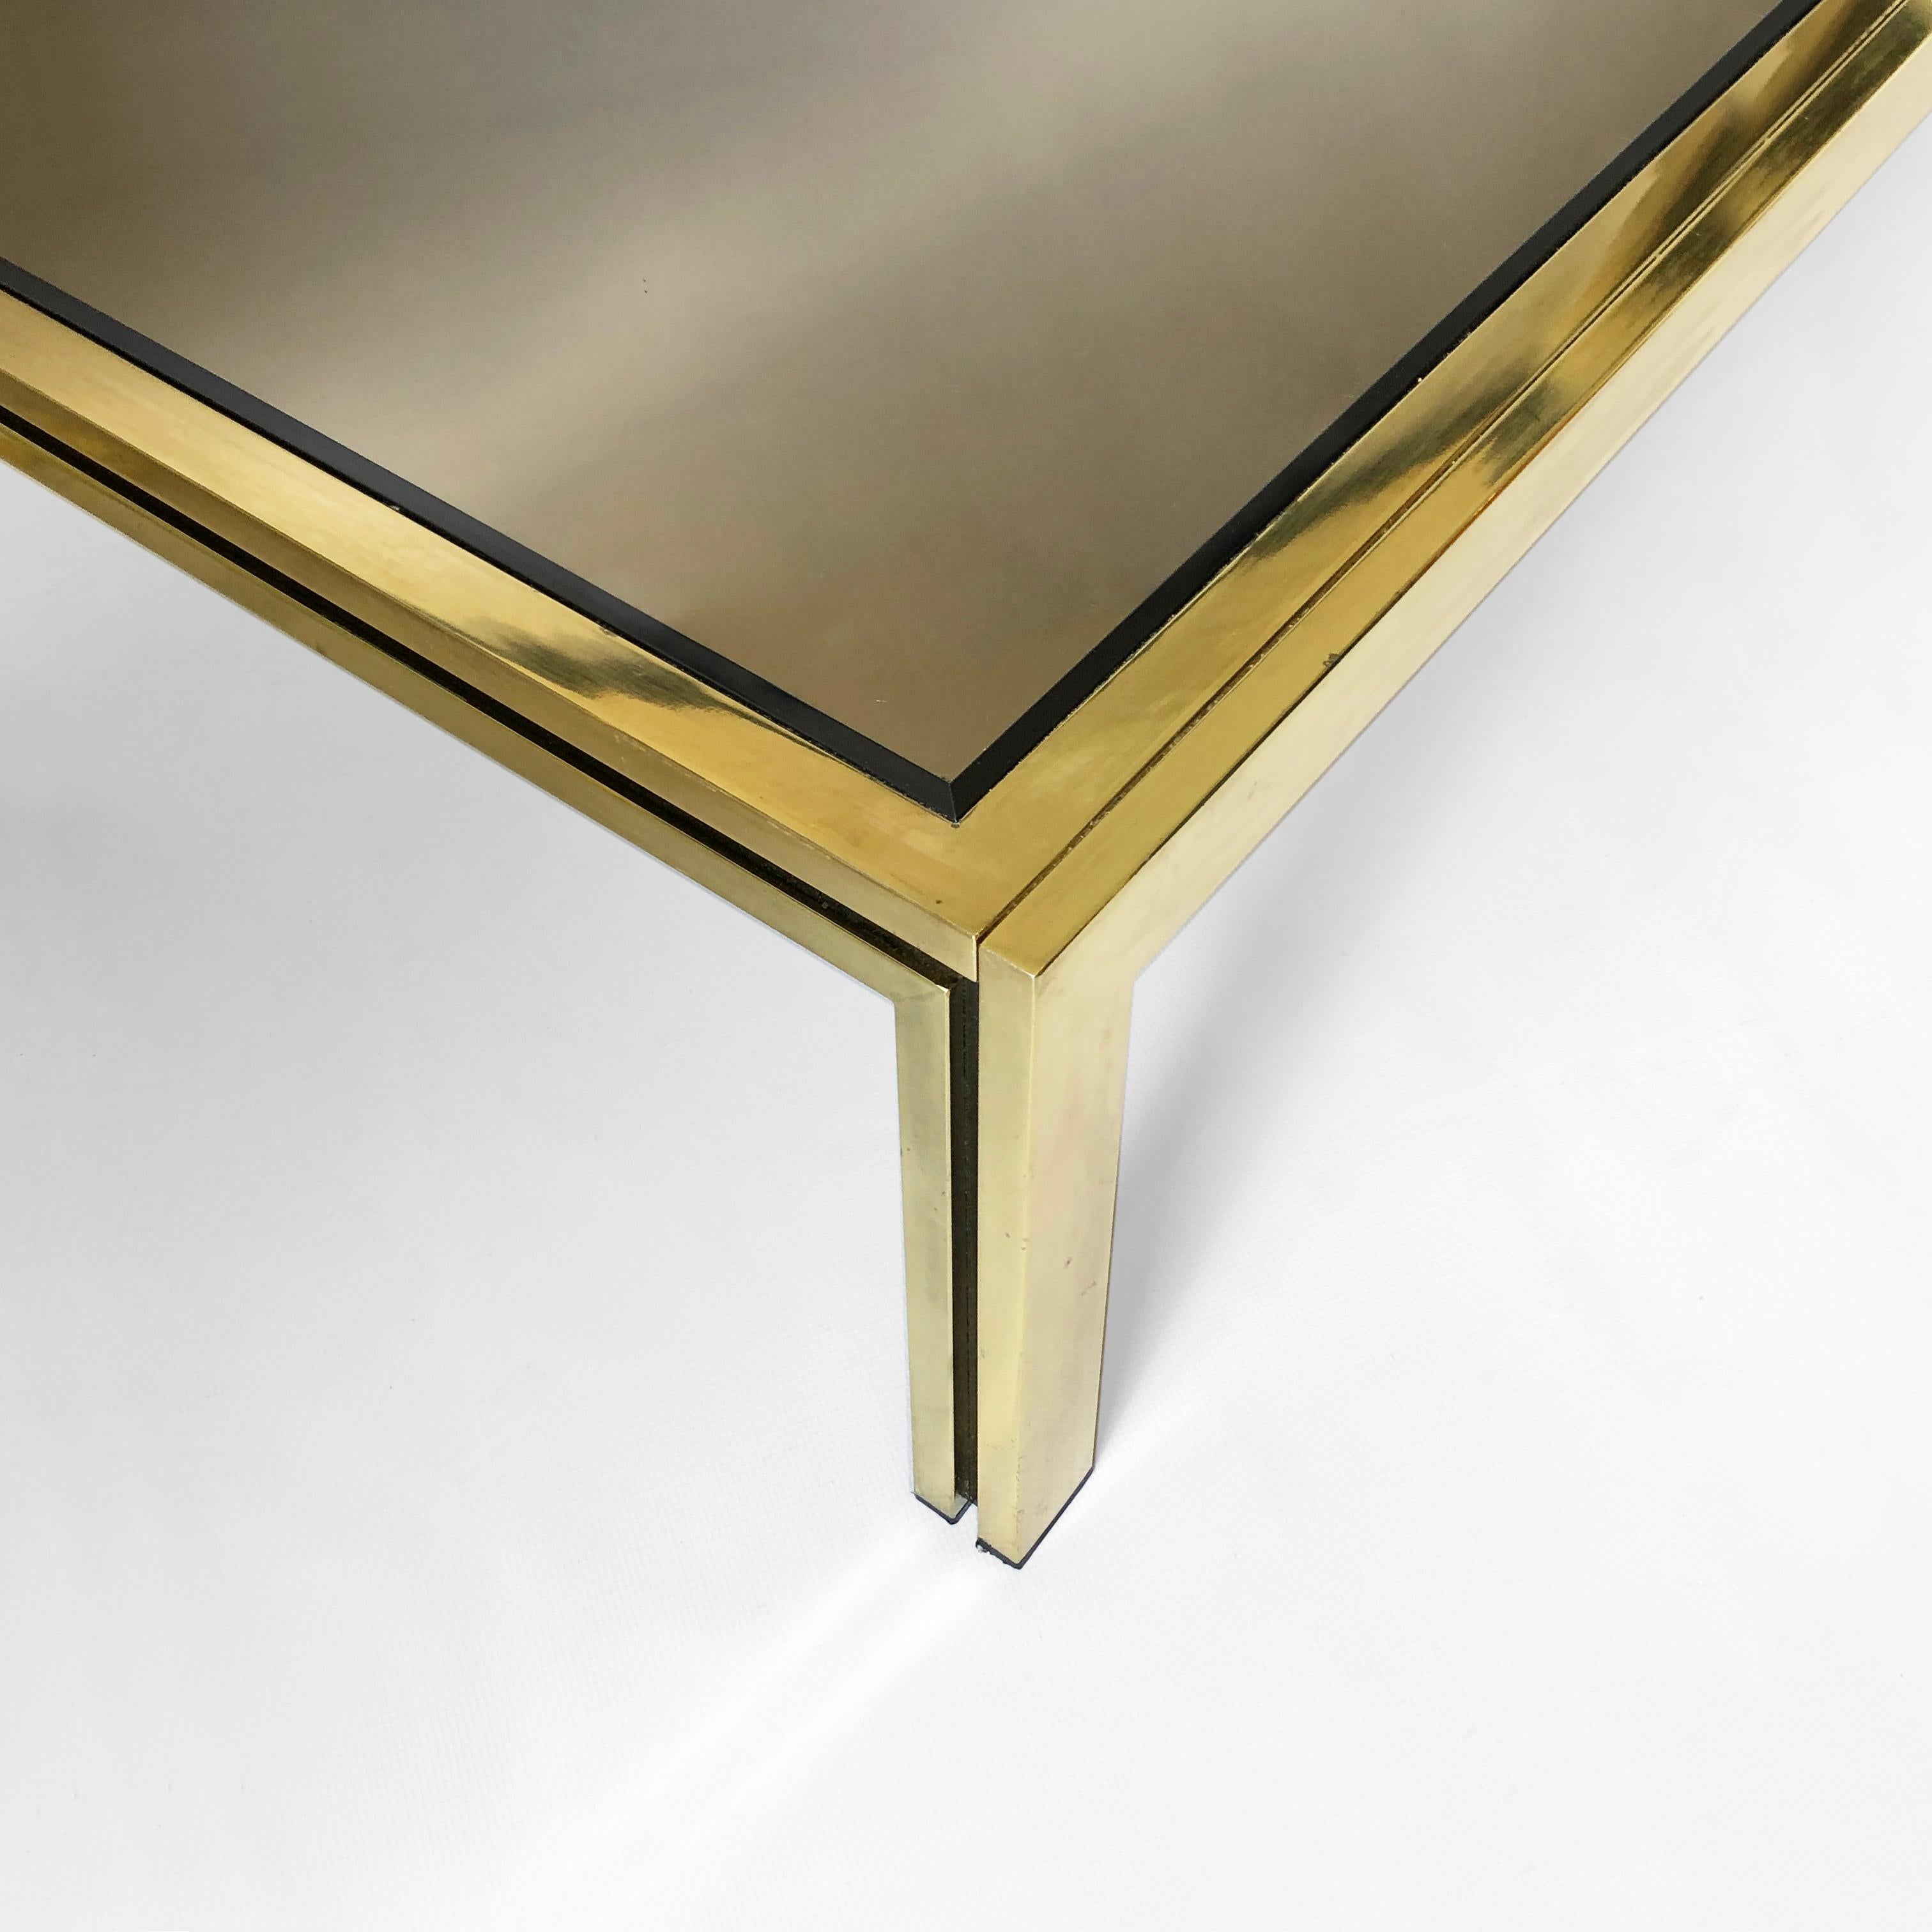 Brass Smoked Mirror Rectangular Coffee Table 1970s Hollywood Regency Renato Zevi For Sale 1